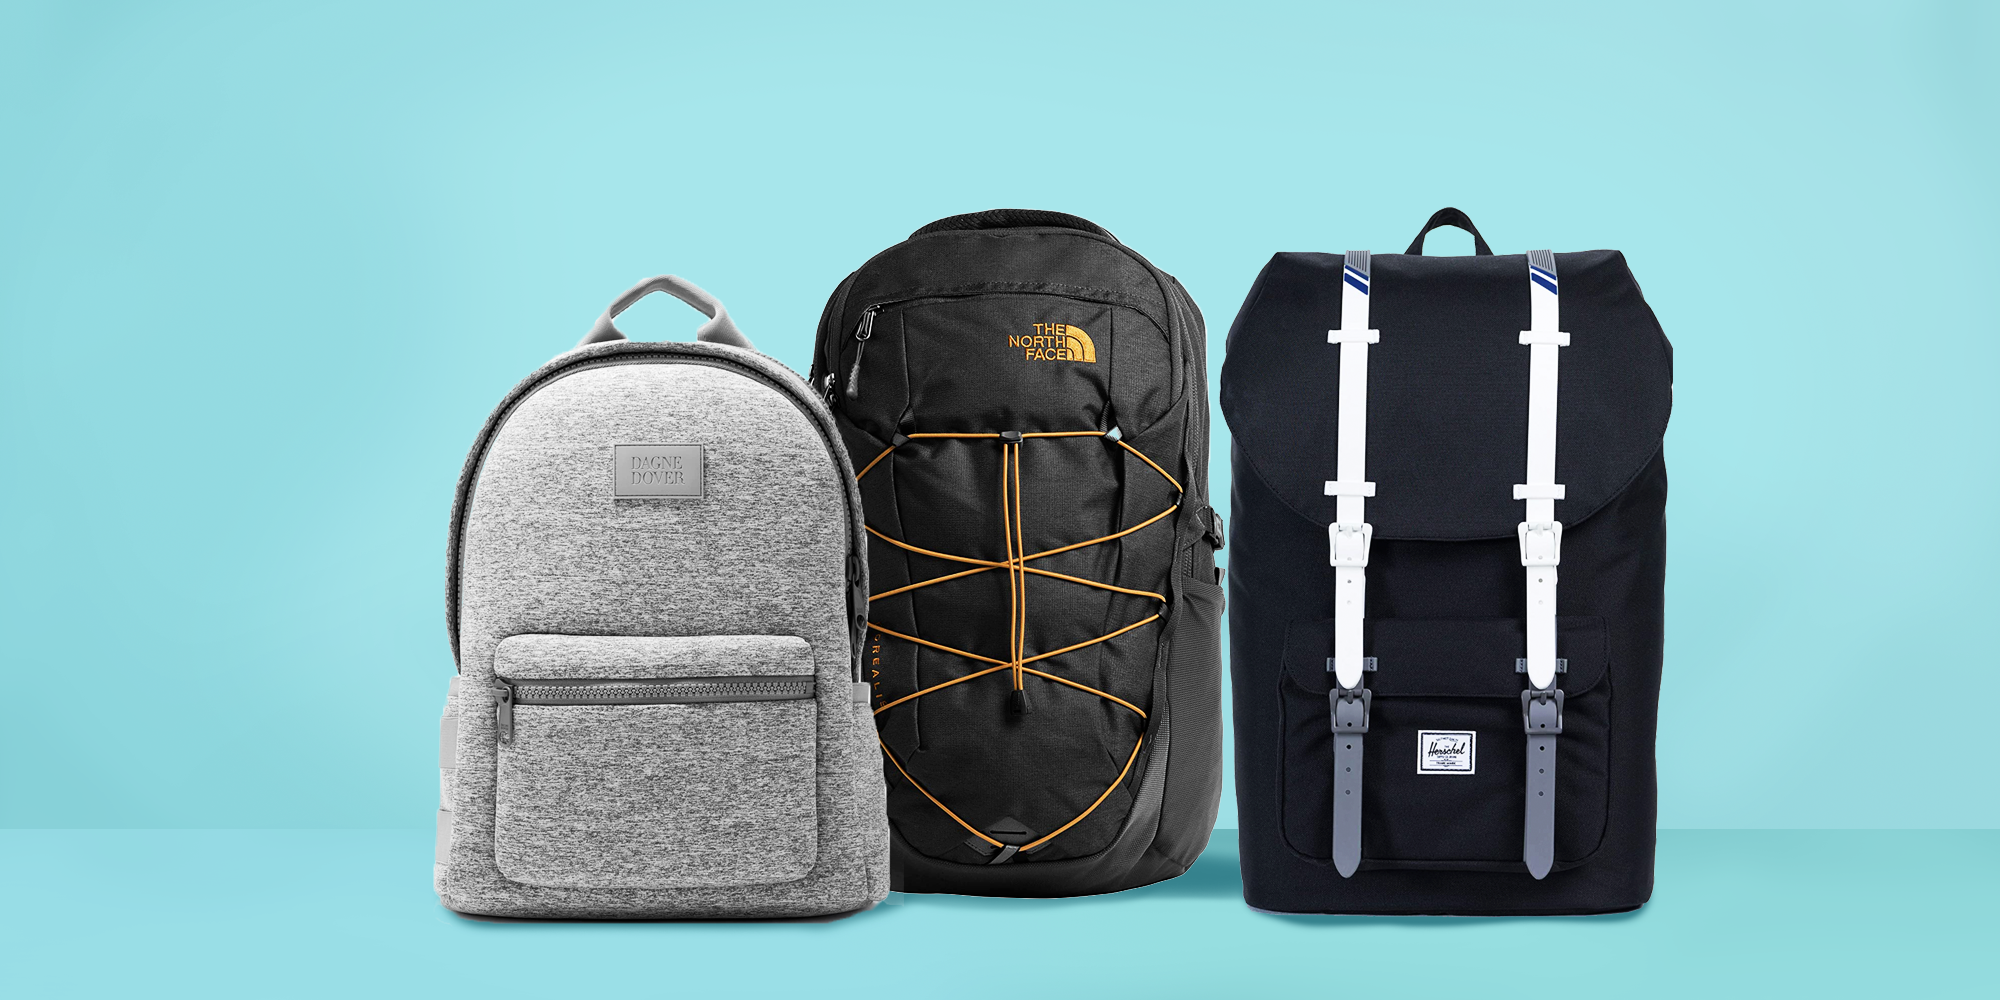 The Smiths School Backpack Bookbag Casual Daypack Travel Laptop Backpack for Girls Women Teenagers Black